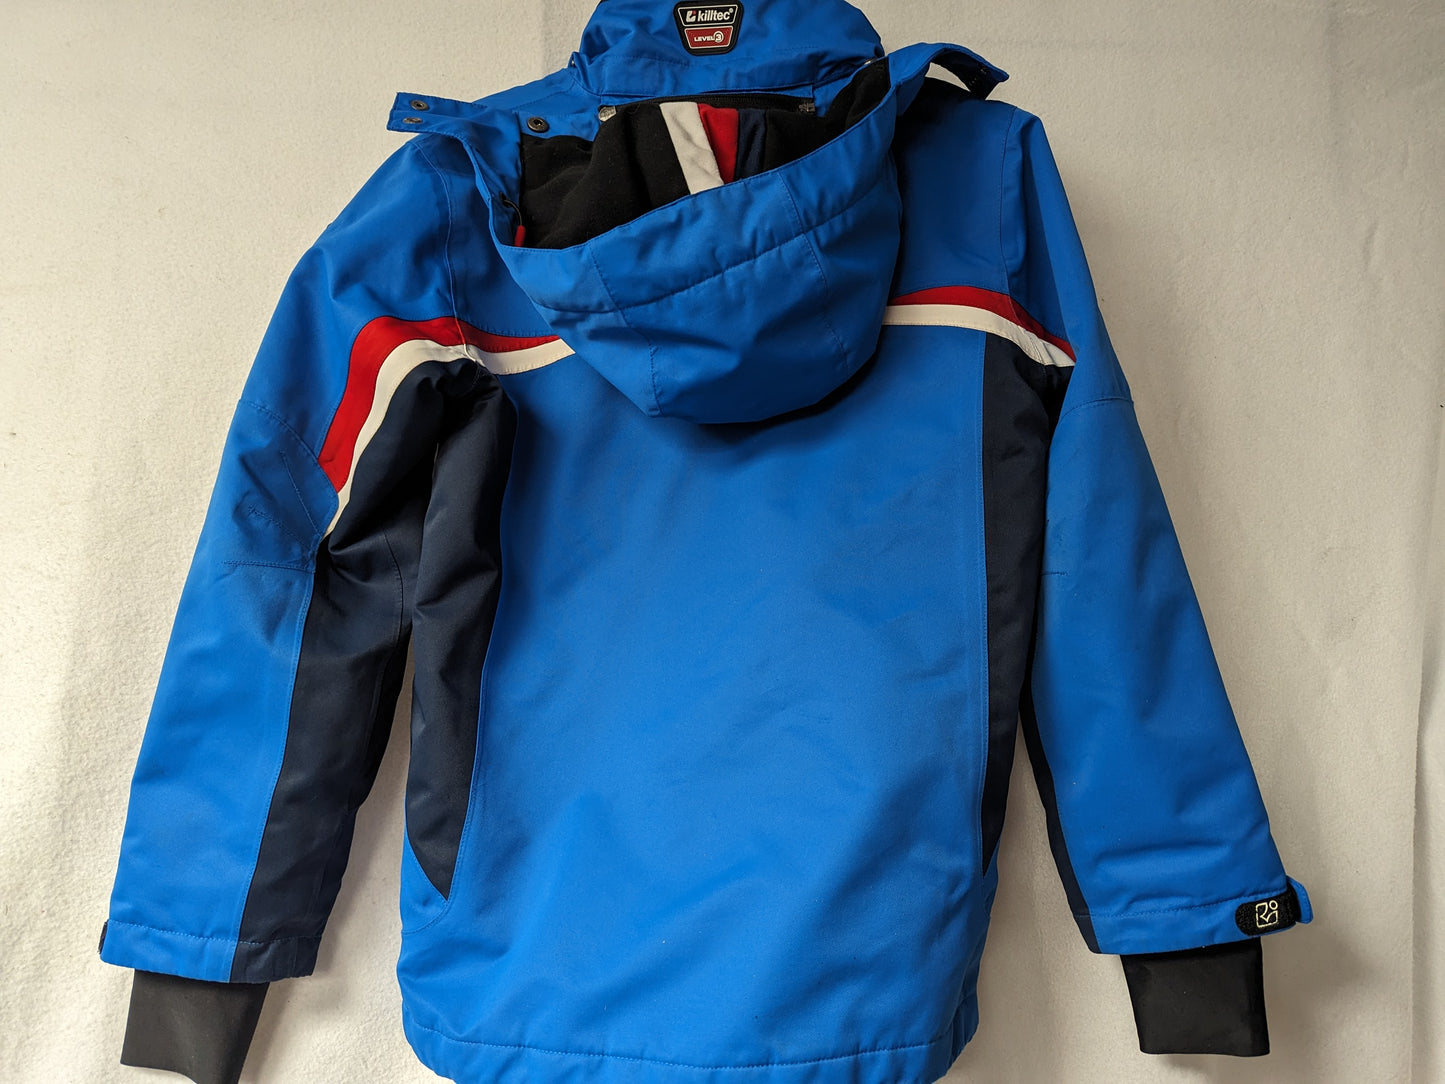 Kiltec Hooded Ski/Snowboard Jacket Coat Size Youth Medium Color Blue Condition Used